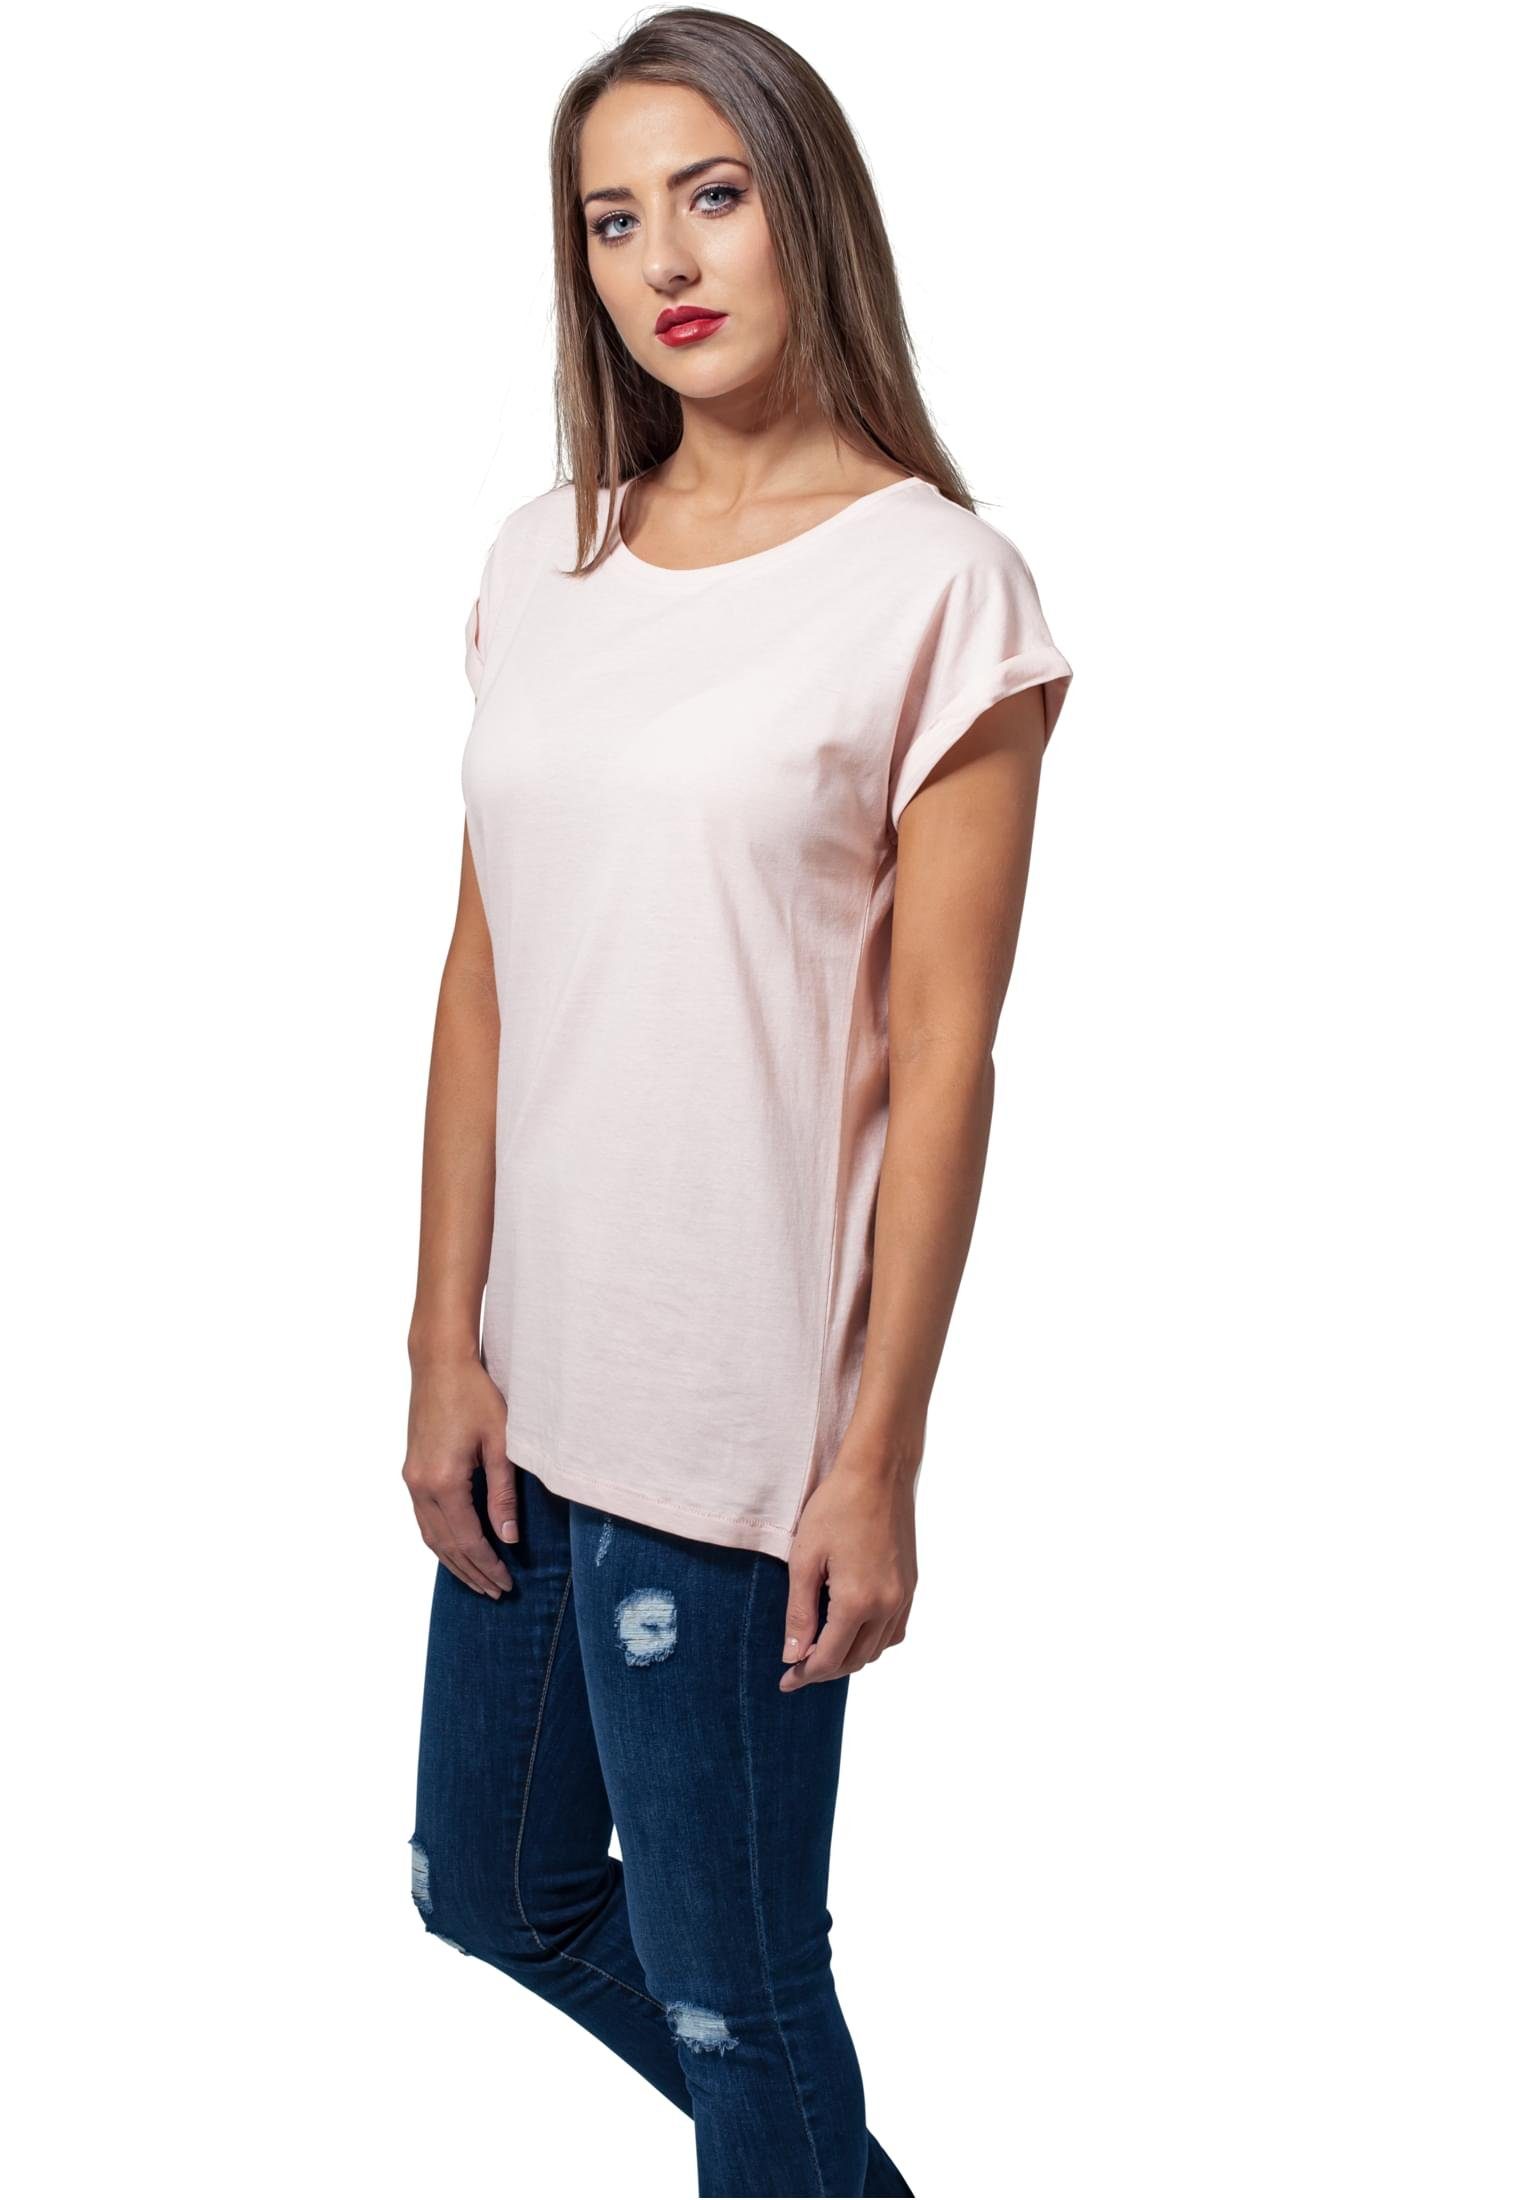 URBAN CLASSICS T-Shirt Shoulder pink TB771 Extended